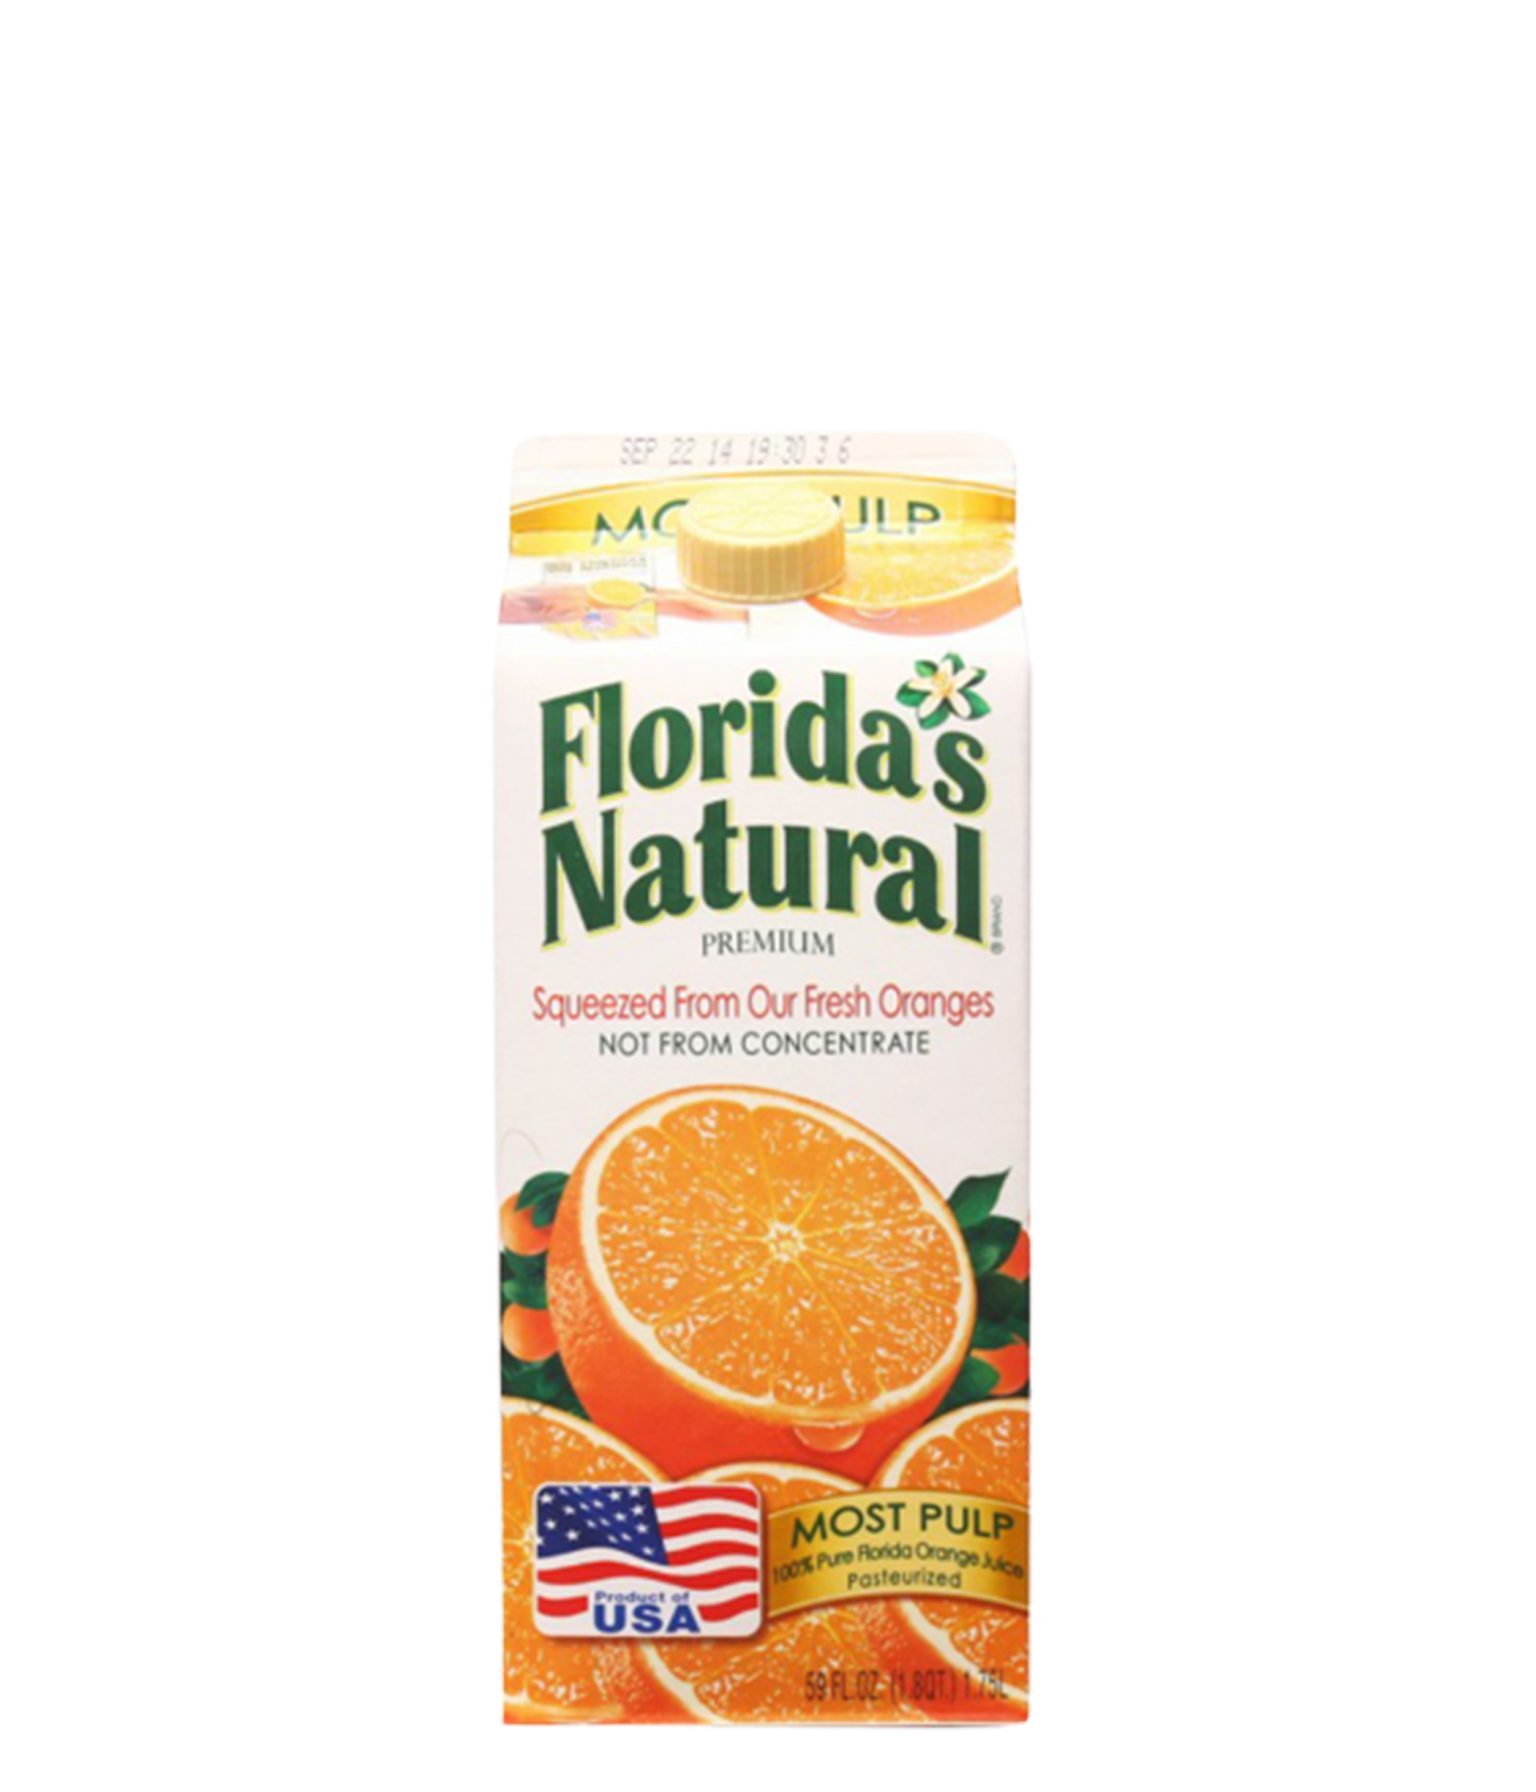 Florida Natural Grower Style Orange Juice (Most Pulp) 1.5 lt-image